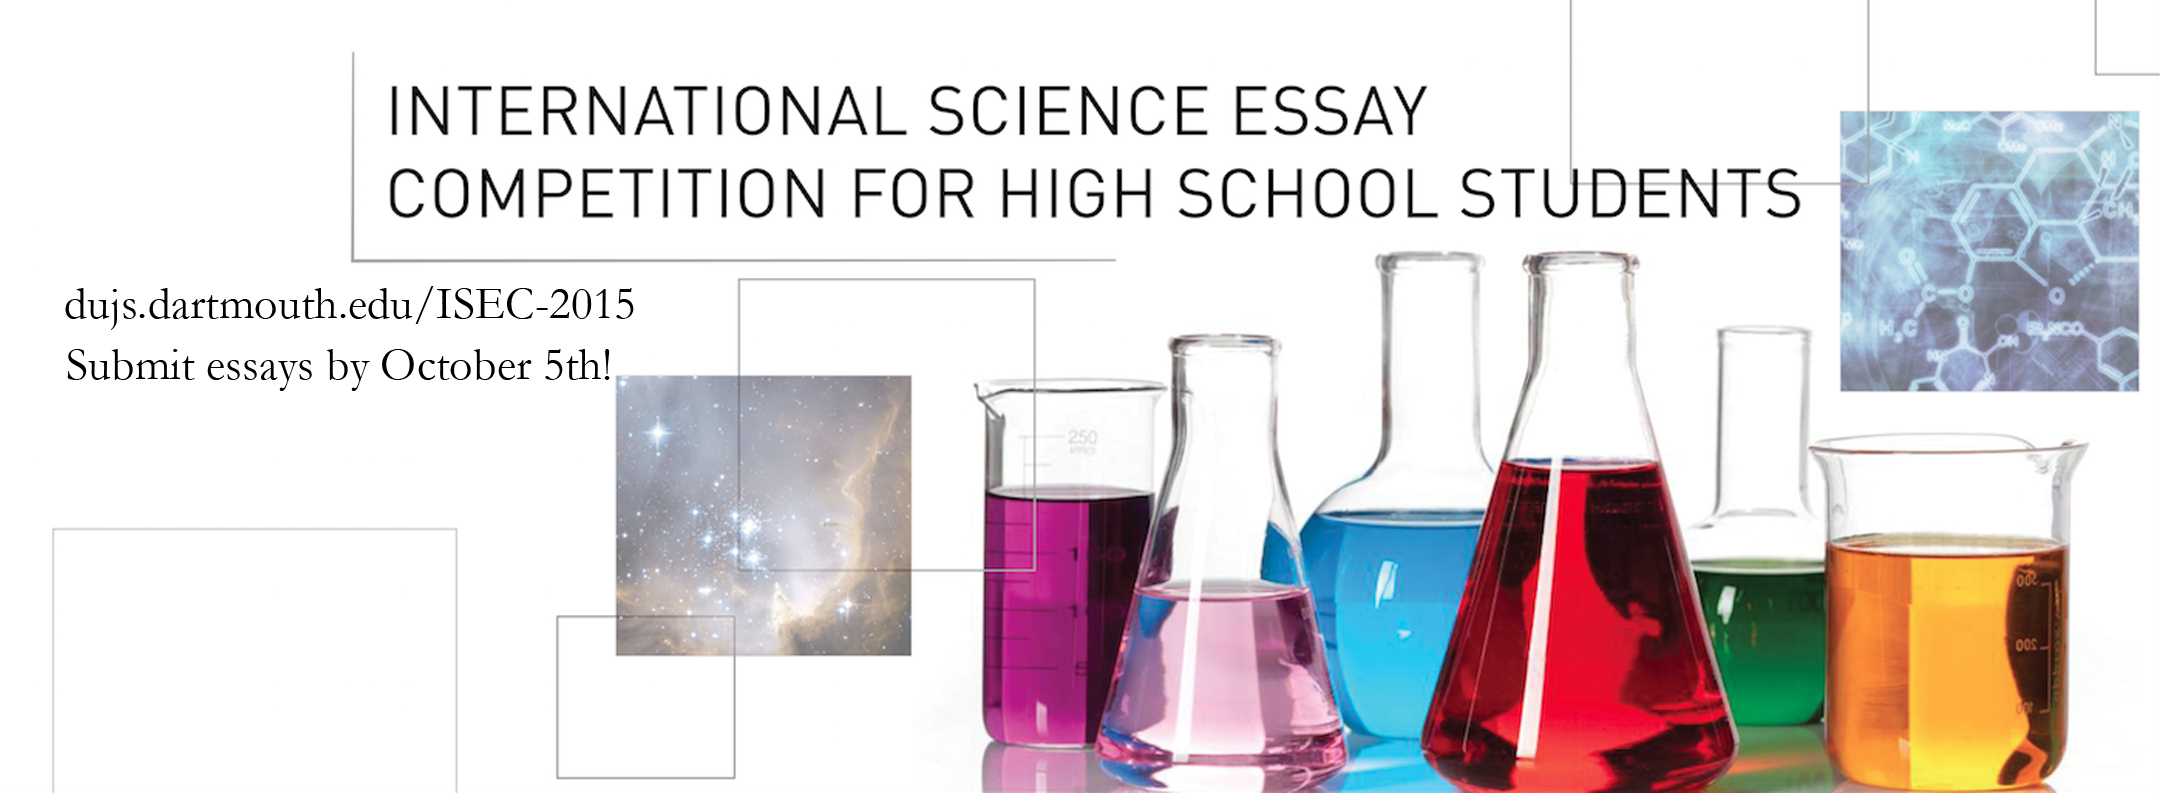 science essay contest high school